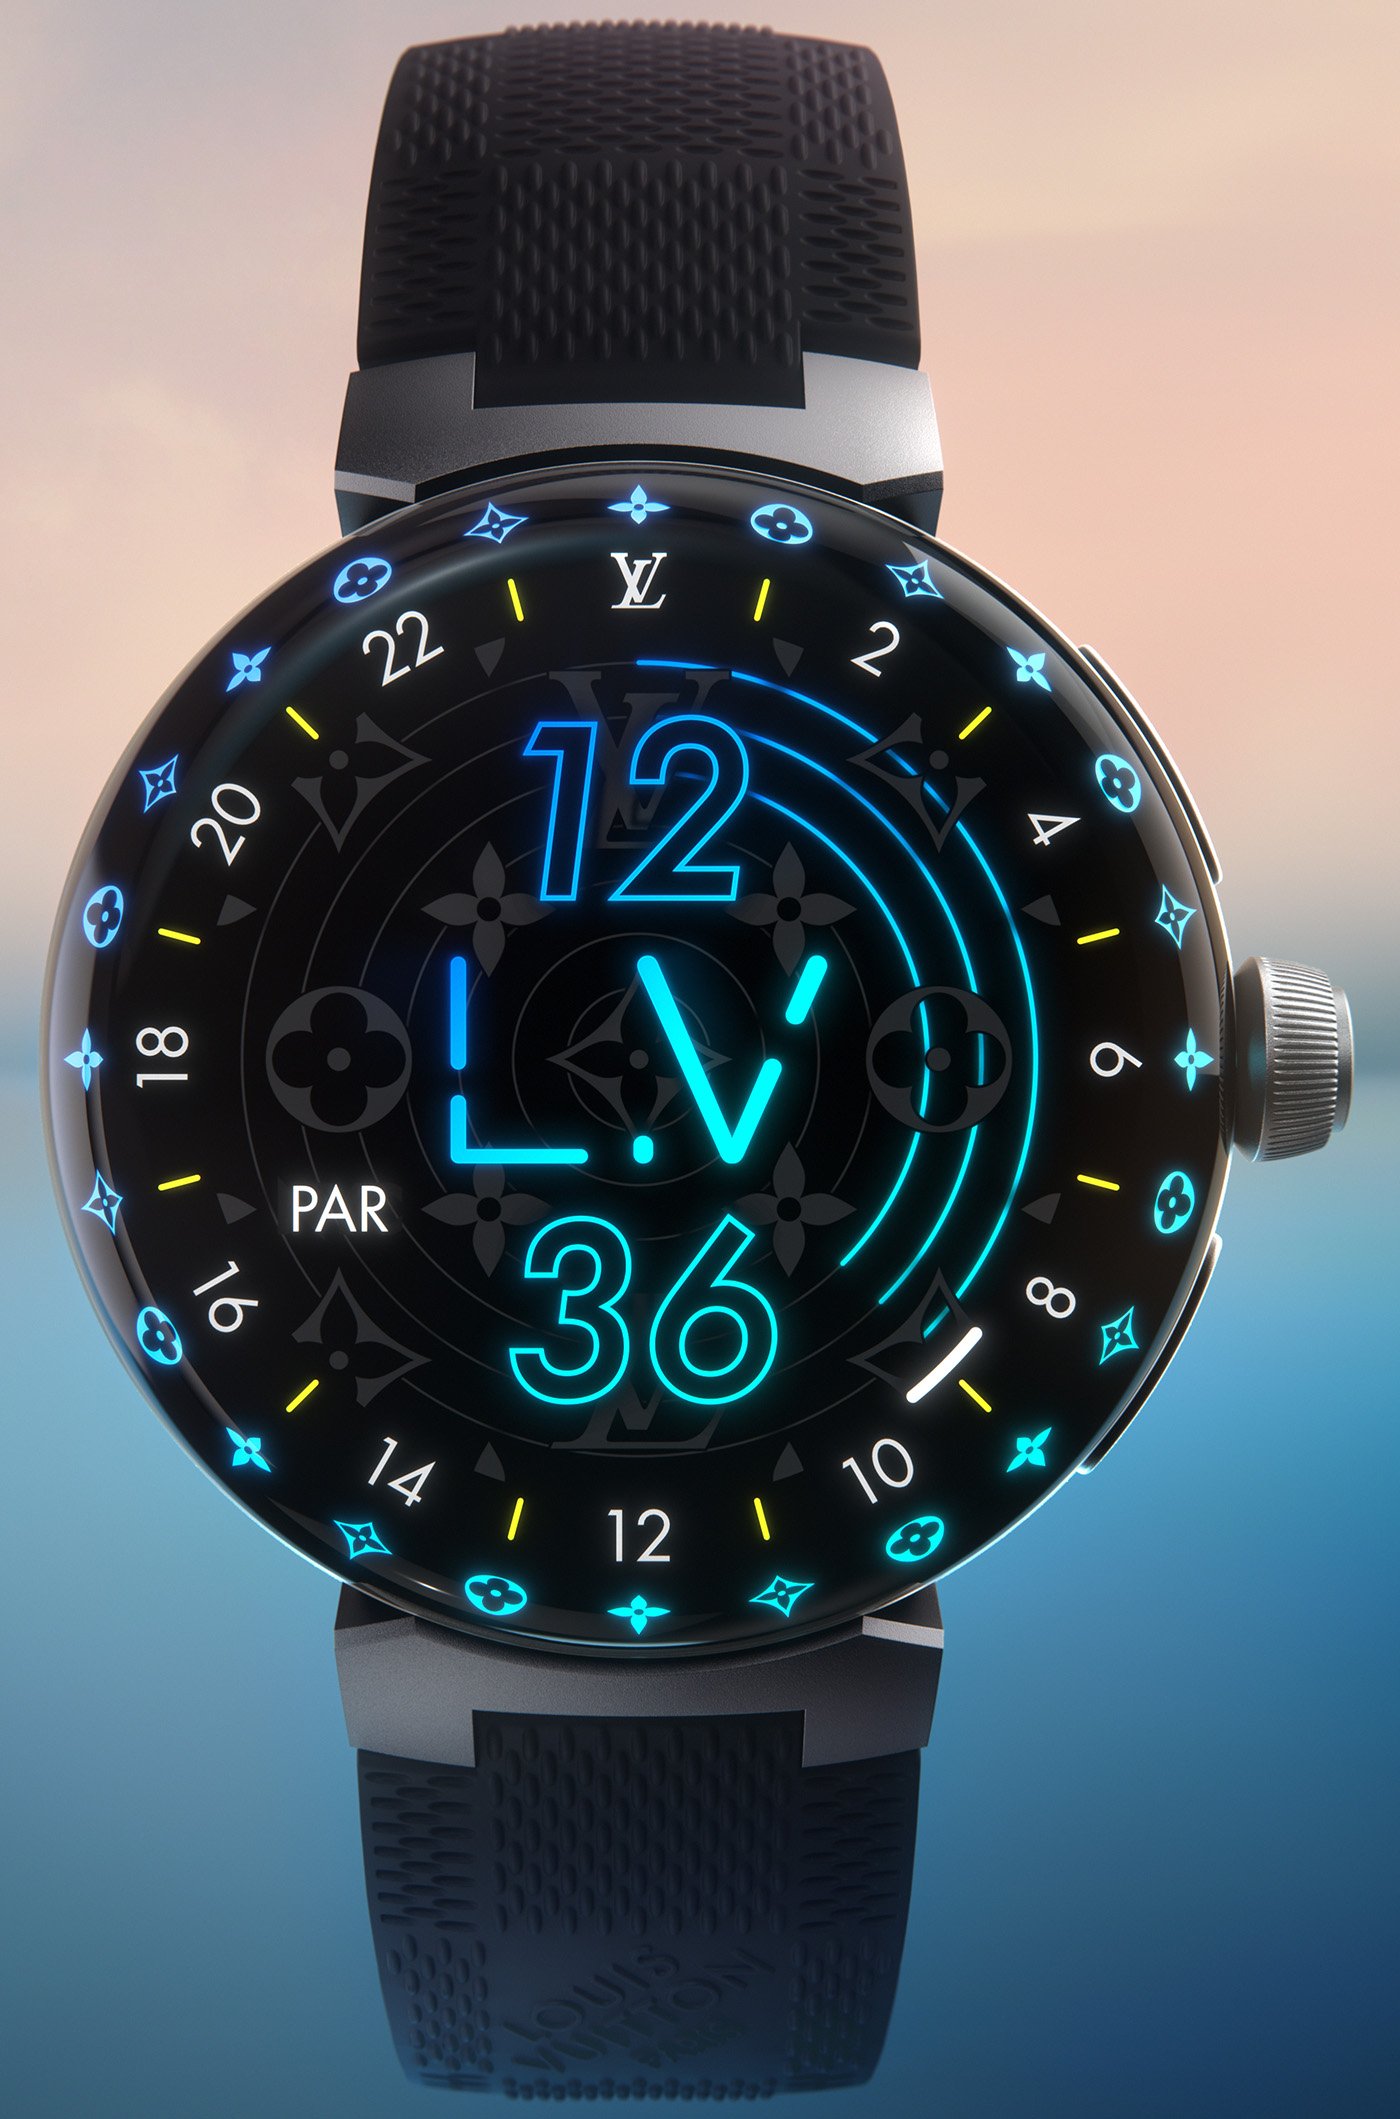 Louis Vuitton представляет умные часы Tambour Horizon Light Up Smartwatch